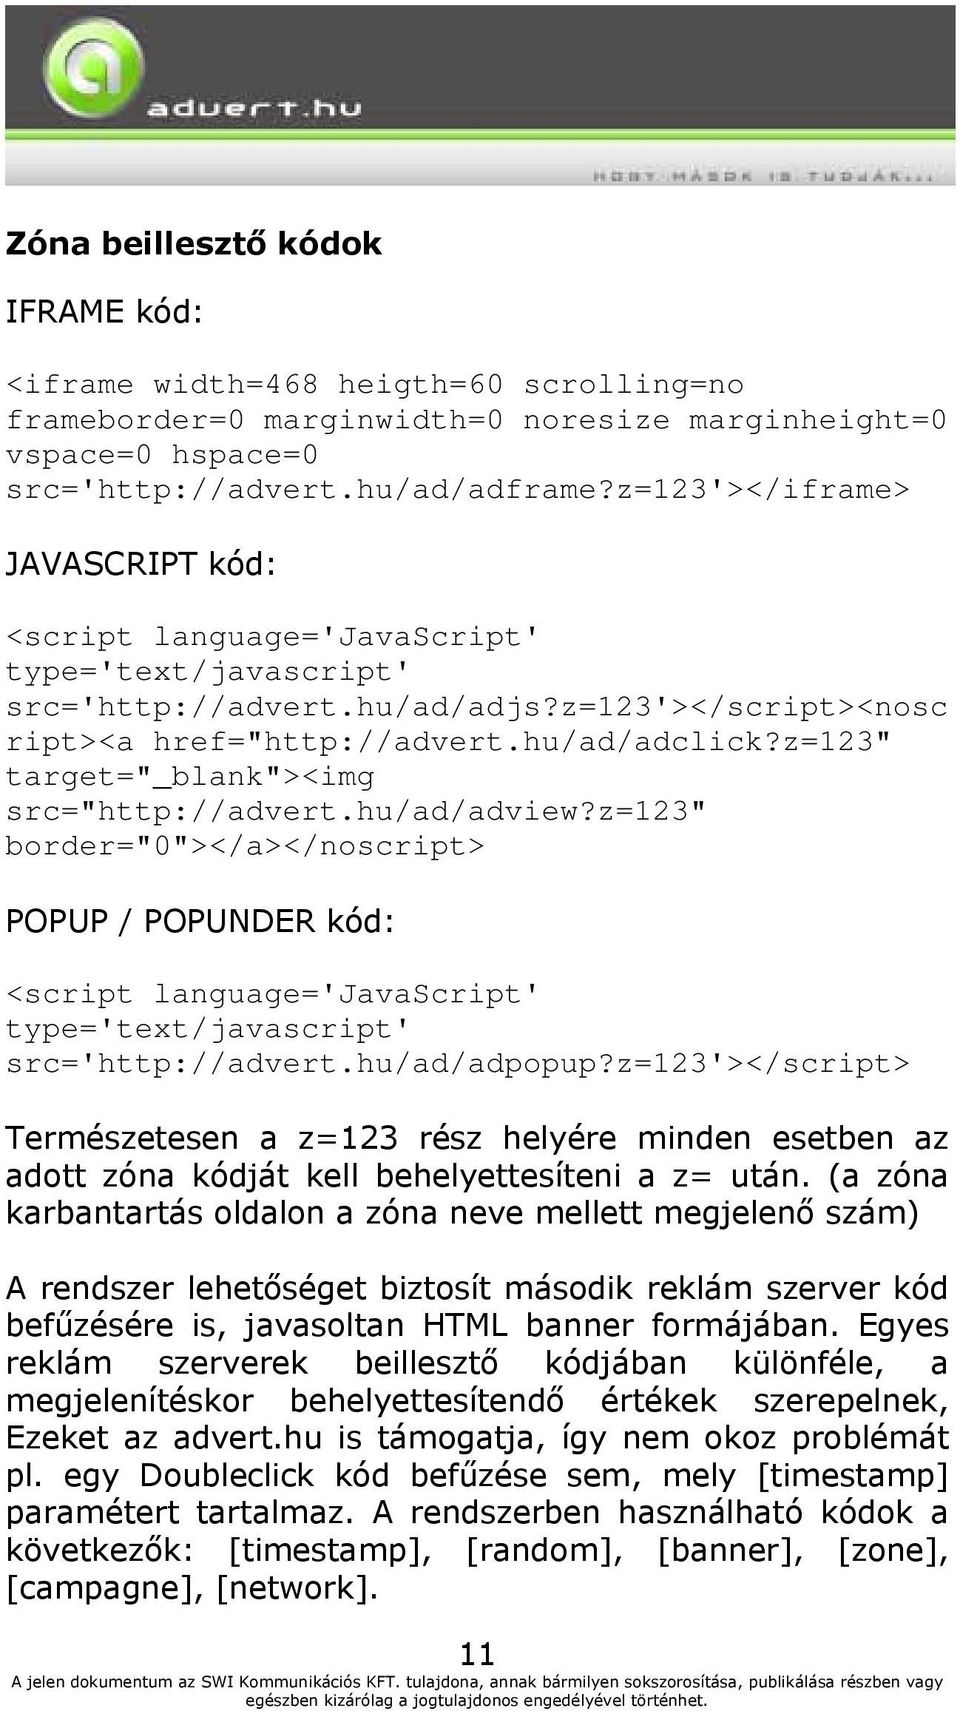 z=123" target="_blank"><img src="http://advert.hu/ad/adview?z=123" border="0"></a></noscript> POPUP / POPUNDER kód: <script language='javascript' type='text/javascript' src='http://advert.